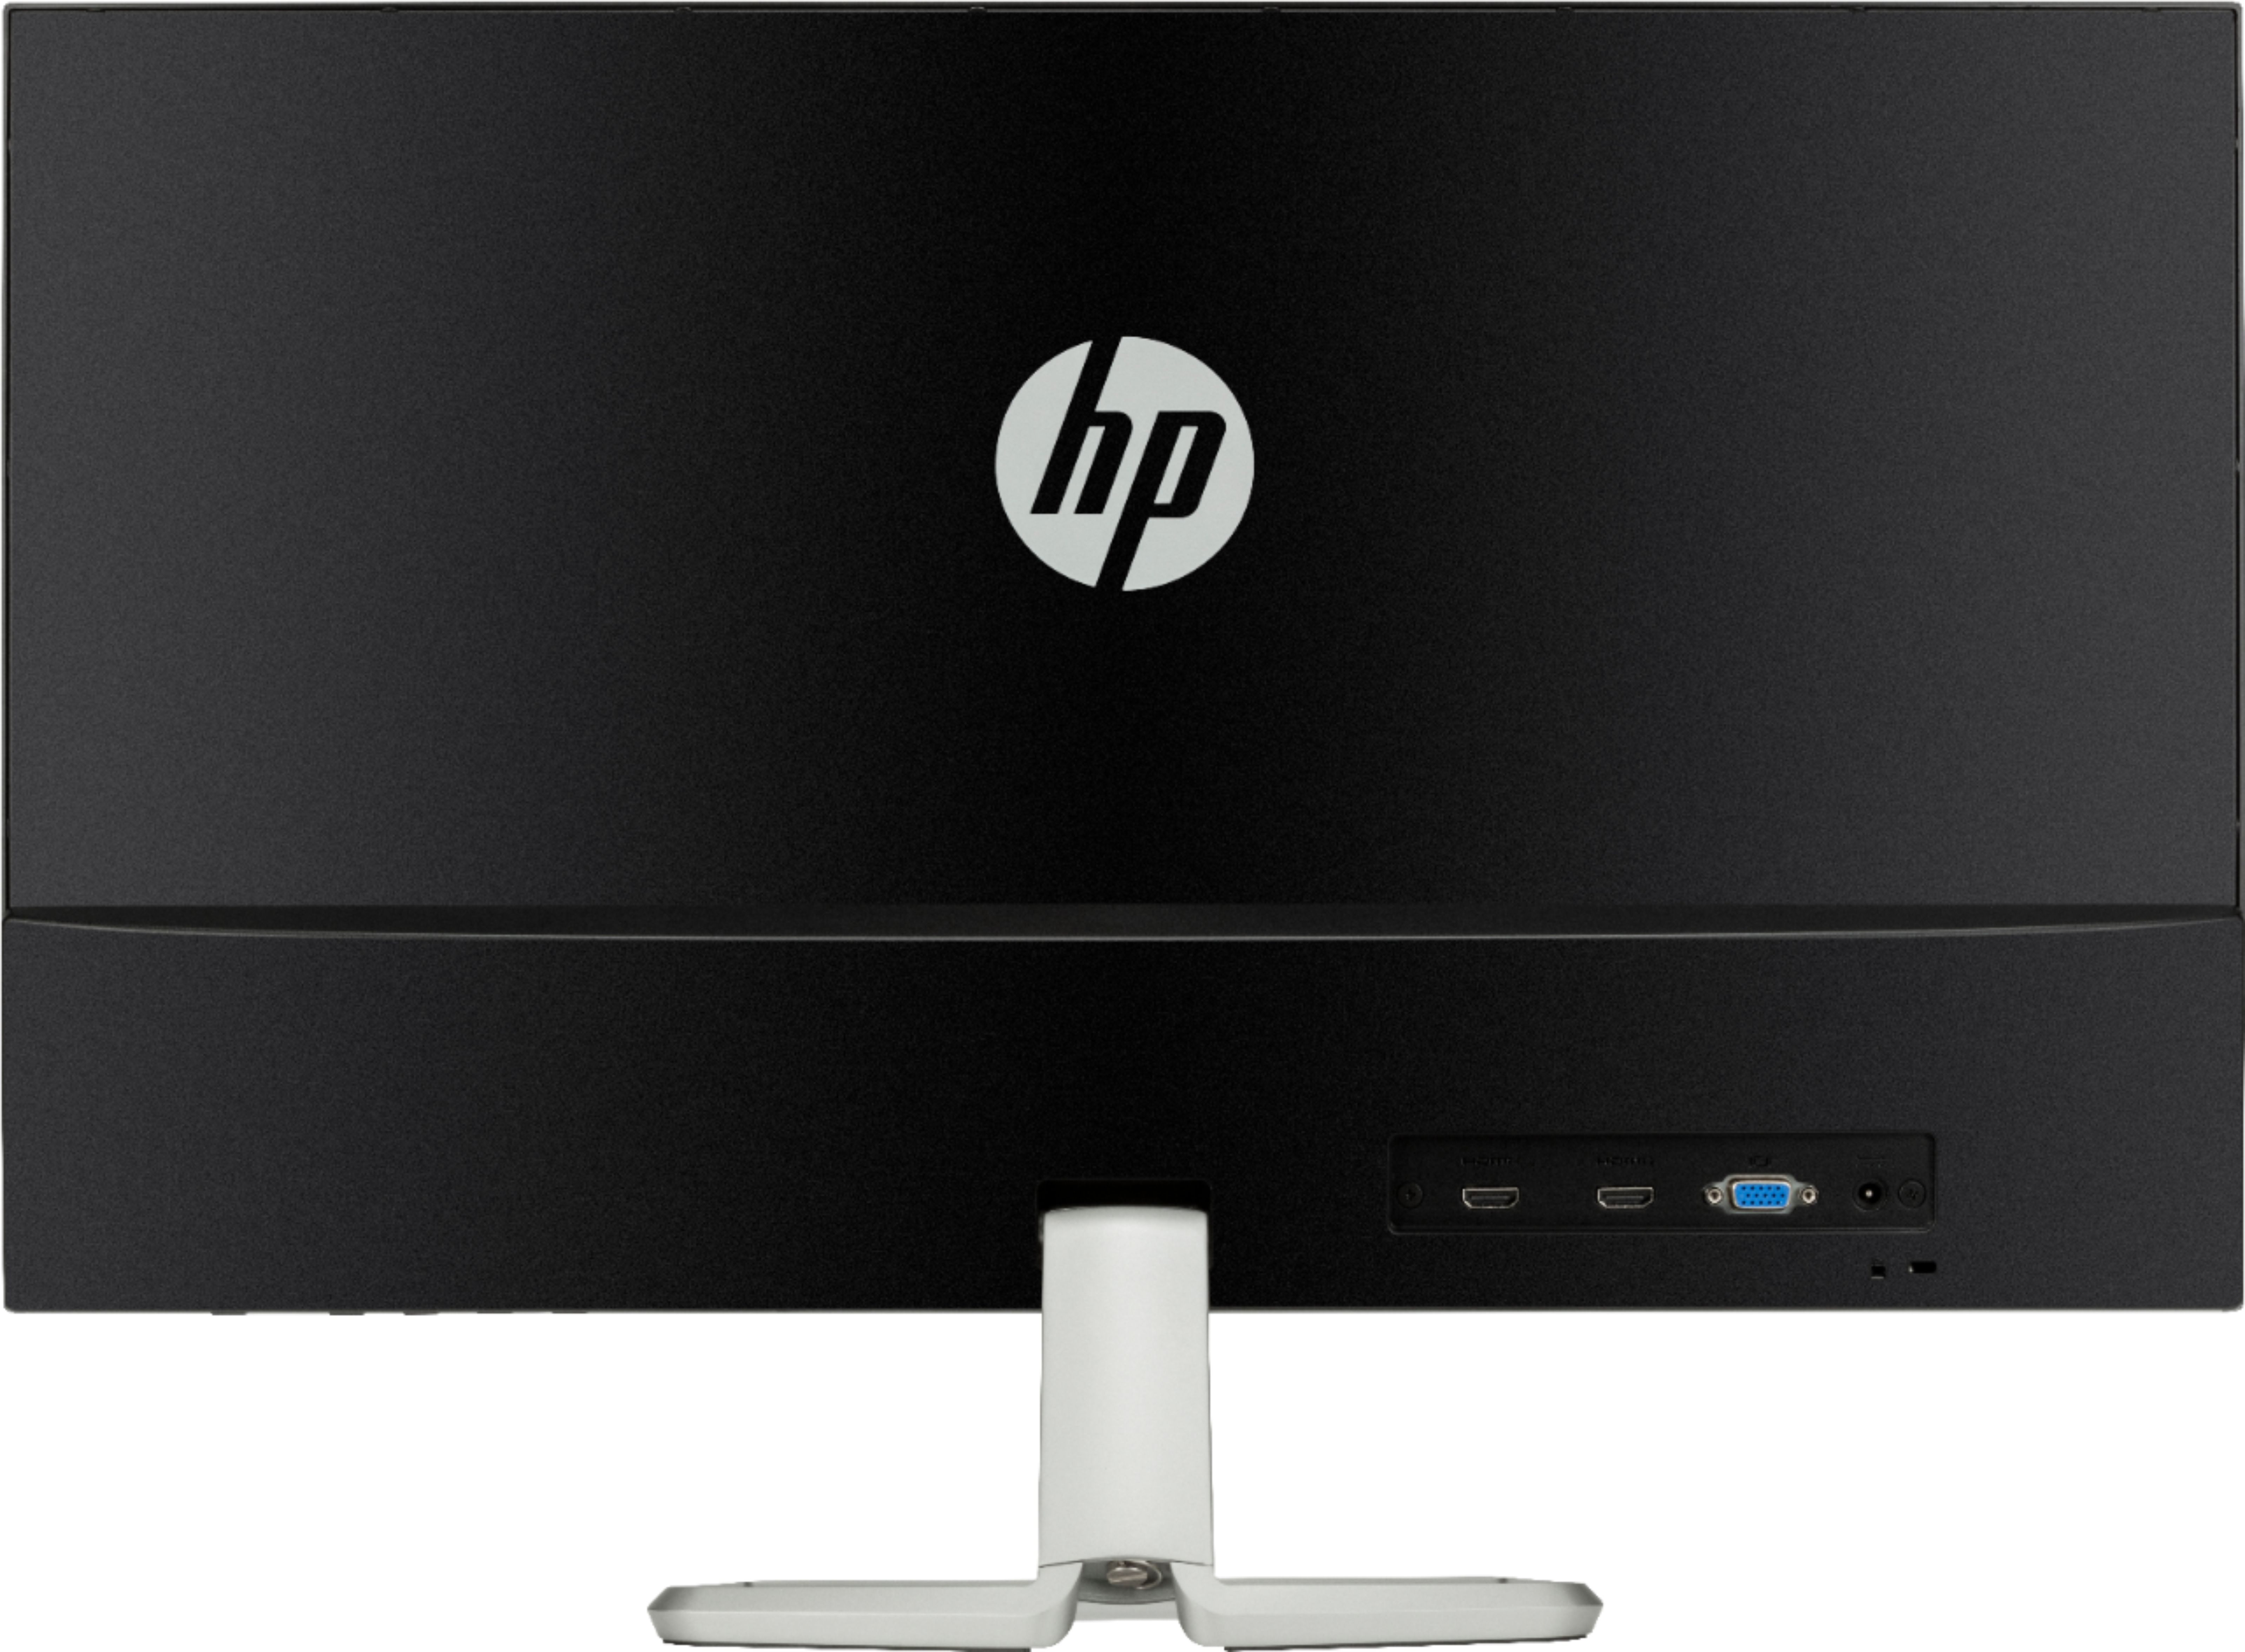 Back View: HP - DeskJet 2725 Wireless All-In-One Instant Ink Ready Inkjet Printer - White